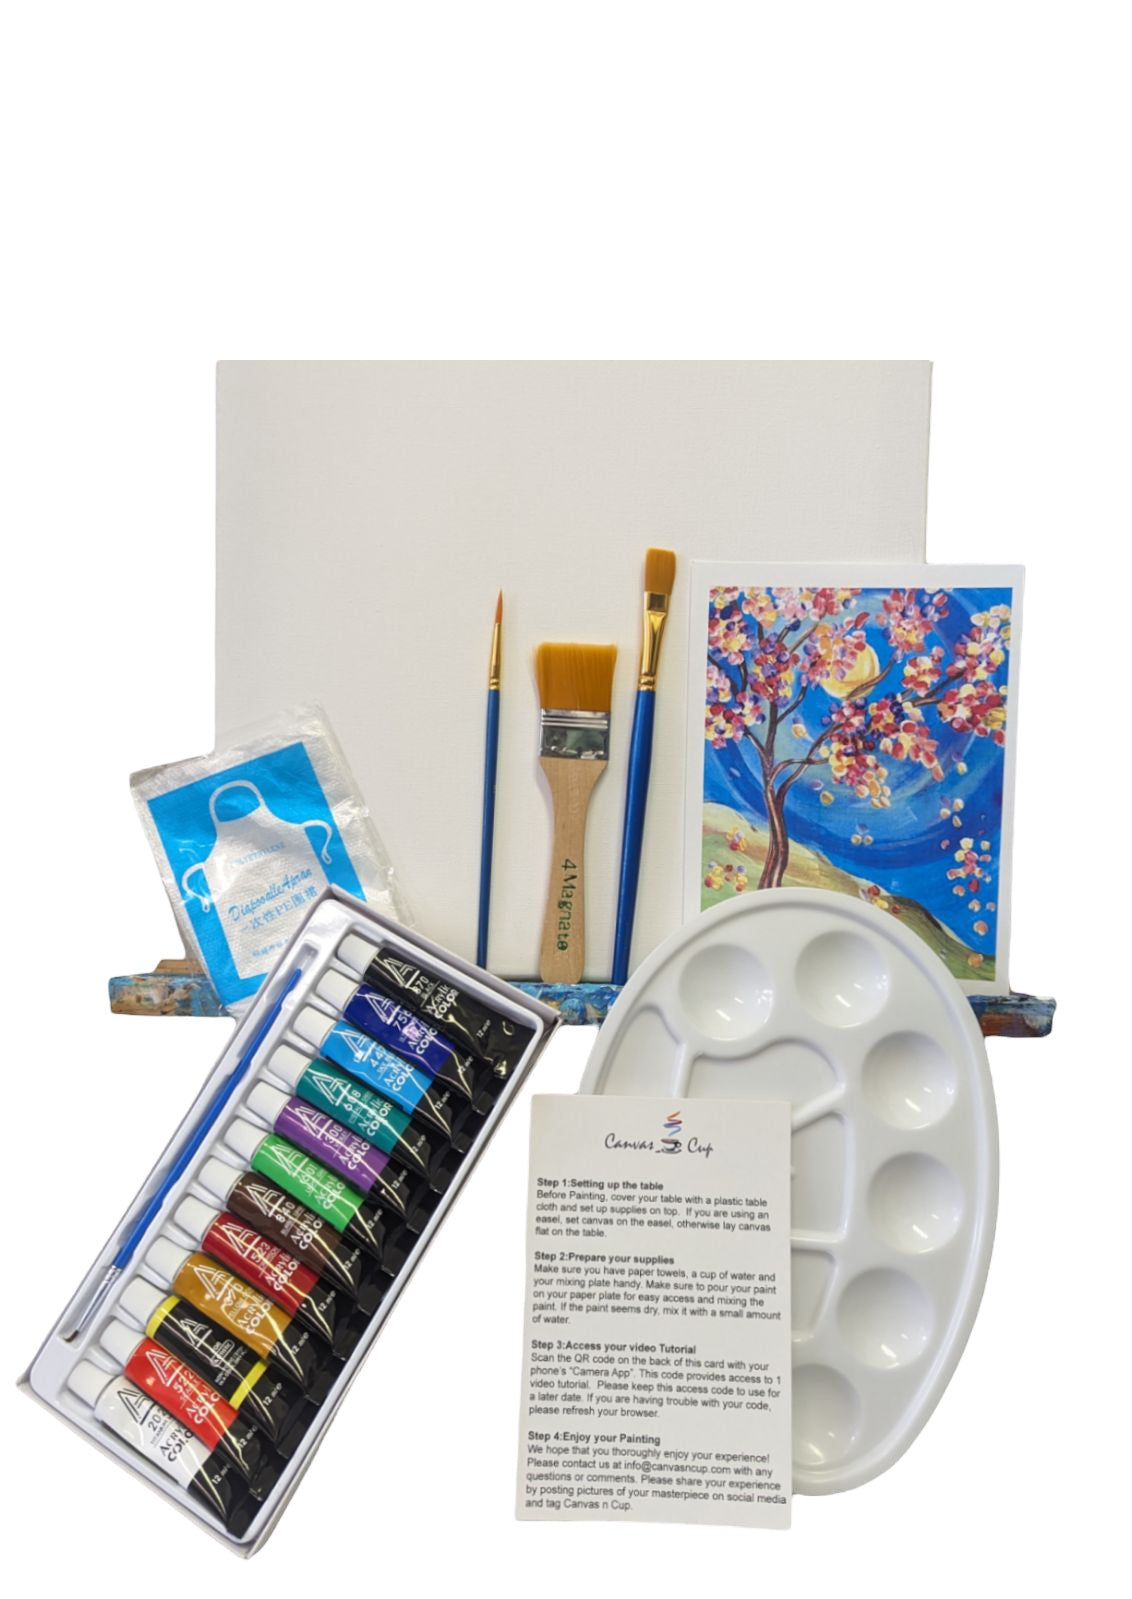 Cherry Blossom Bridge At Home Painting Kit & Video Tutorial